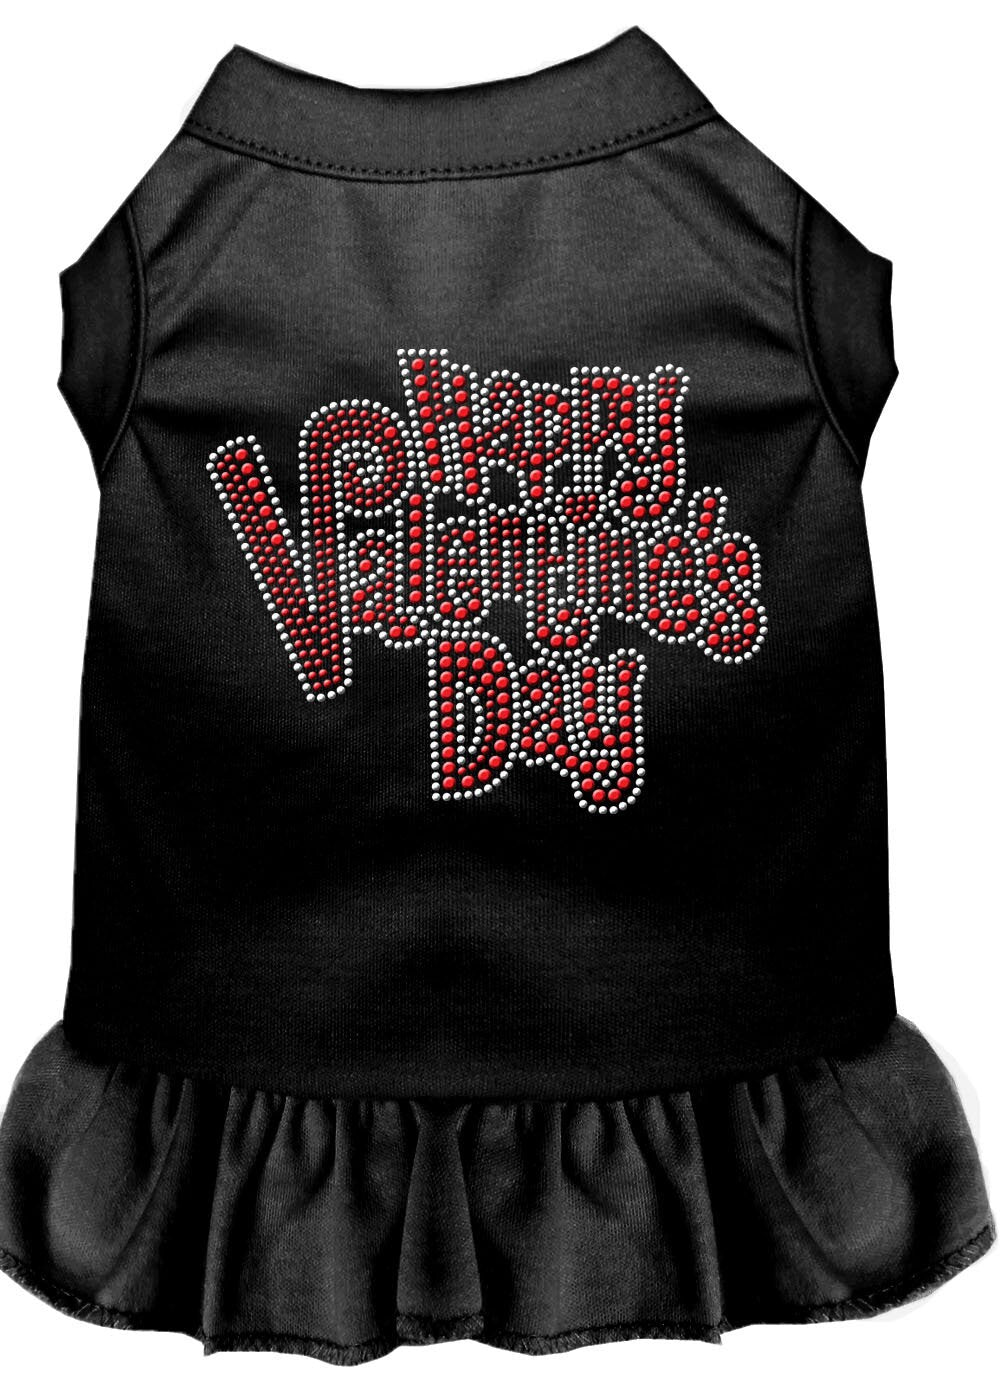 Pet Dog & Cat Dress Rhinestone, "Happy Valentines Day"